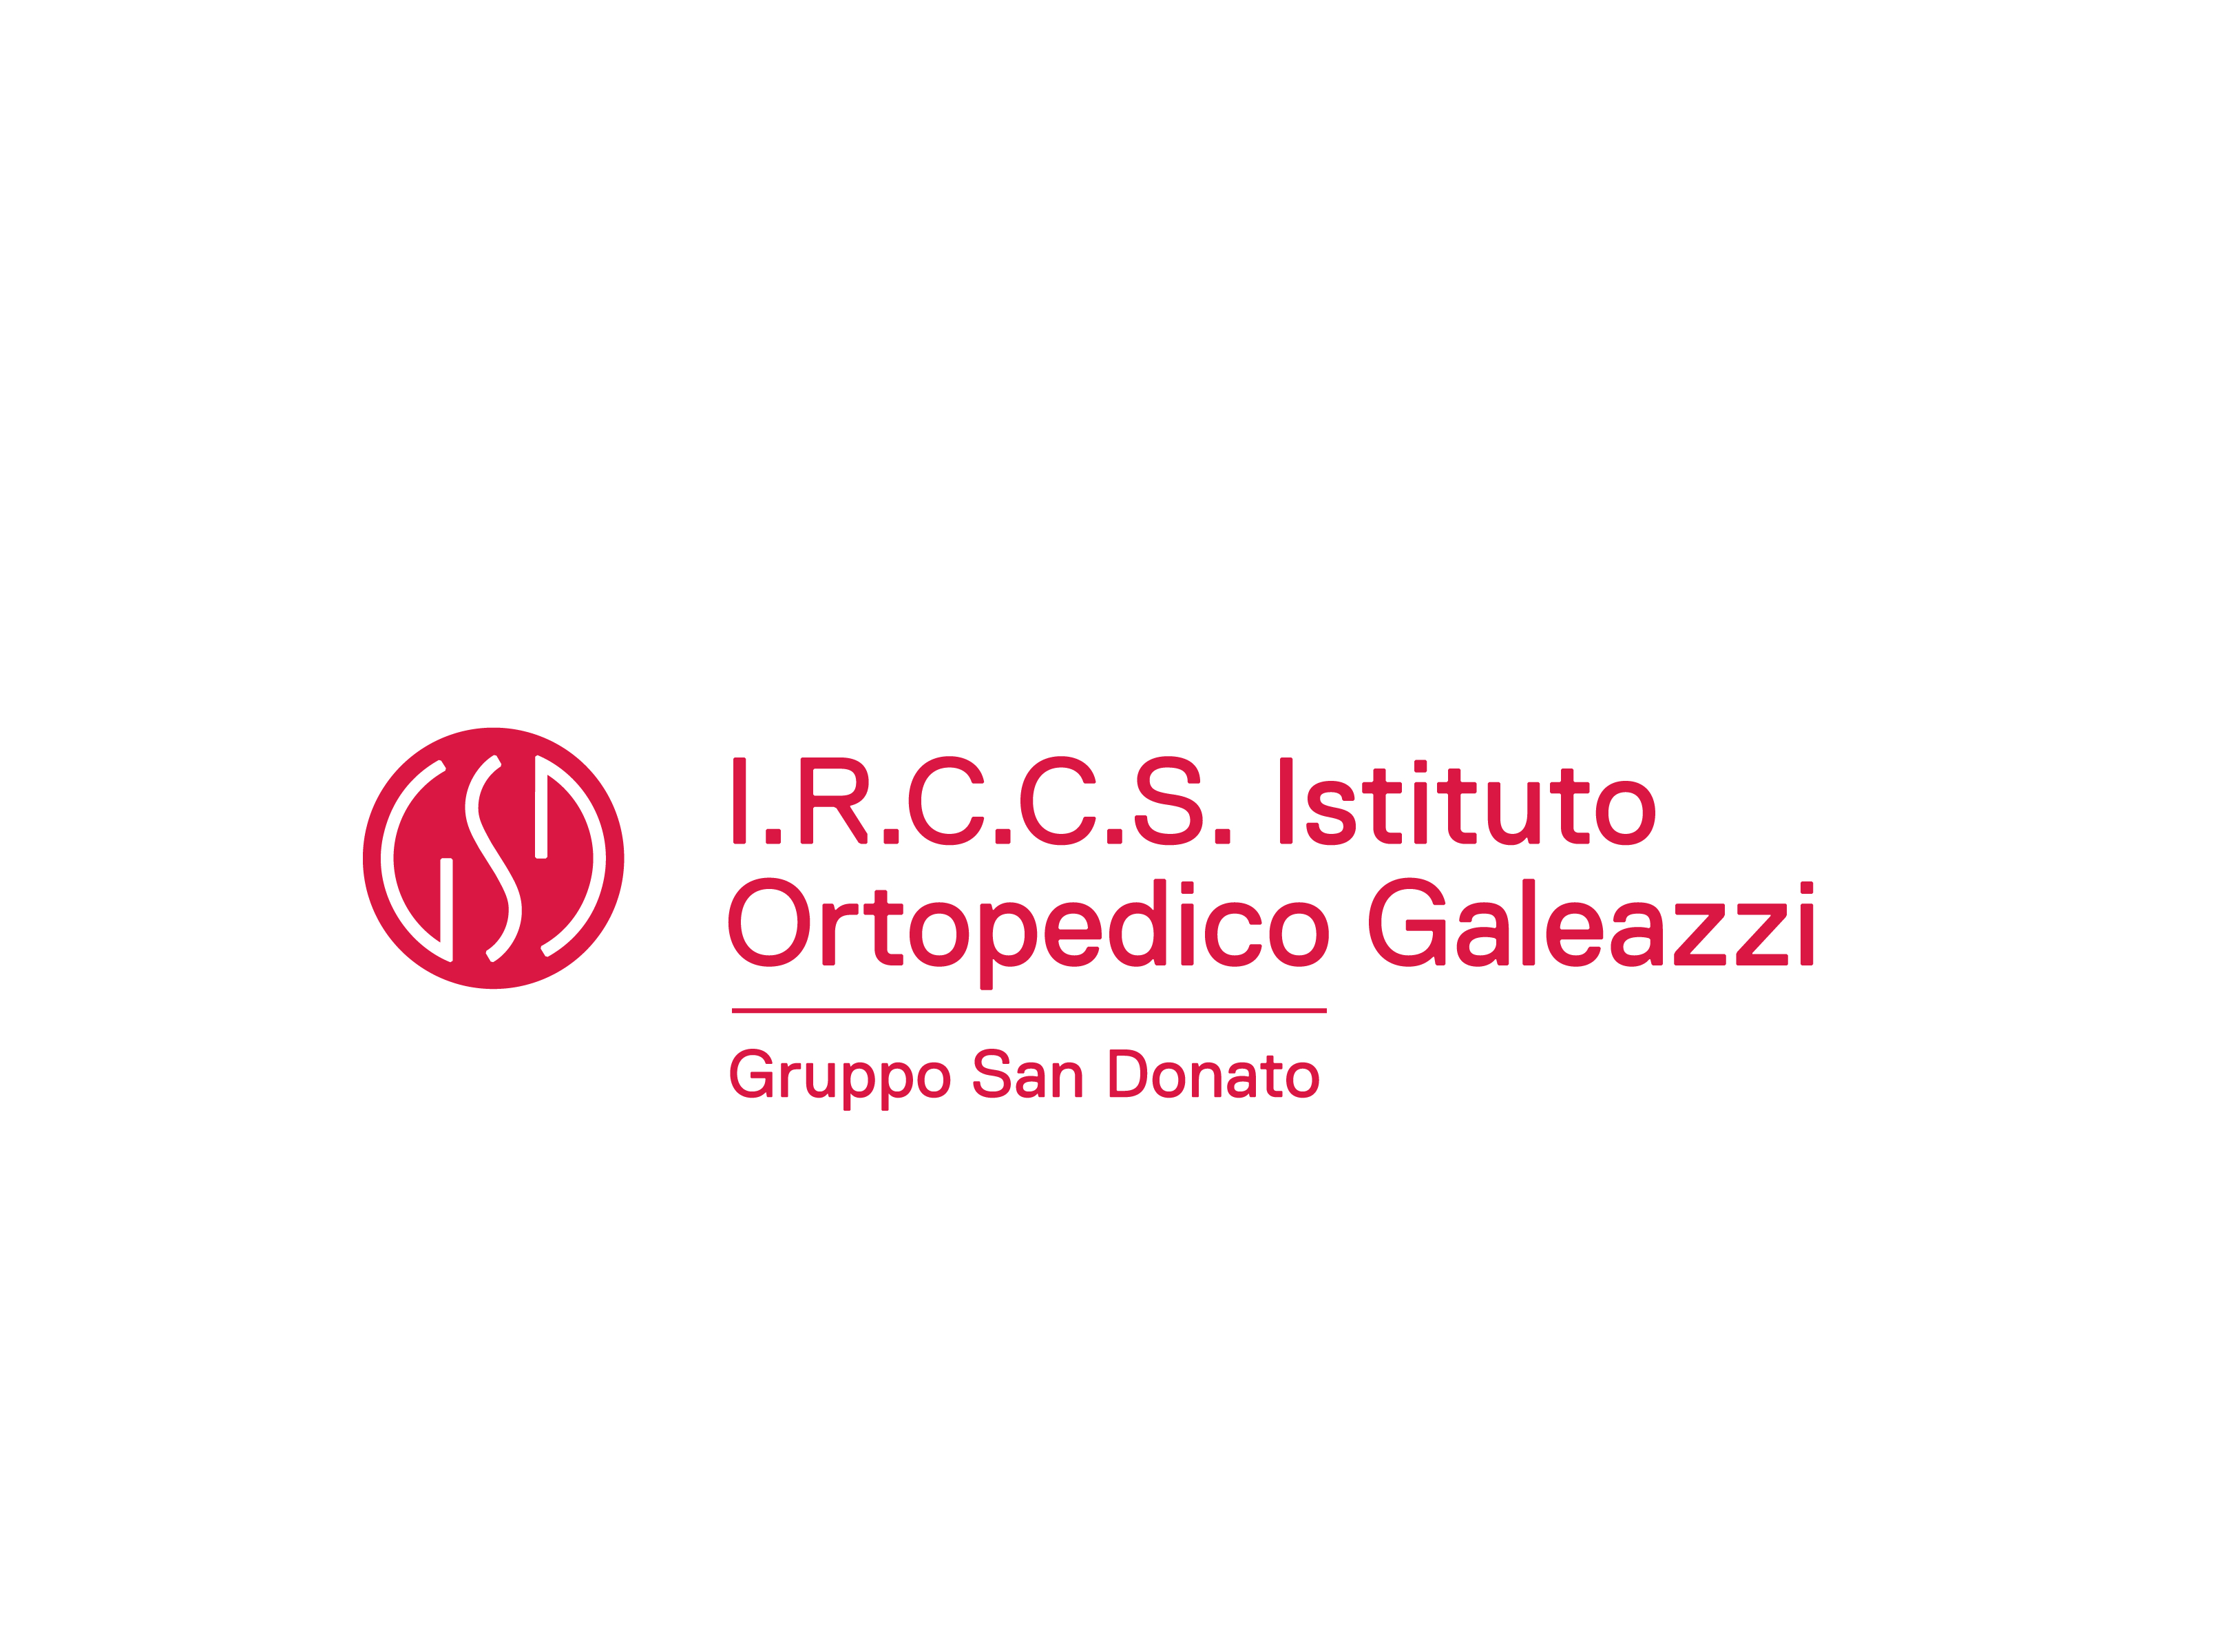 IRCCS Istituto Ortopedico Galeazzi的标志